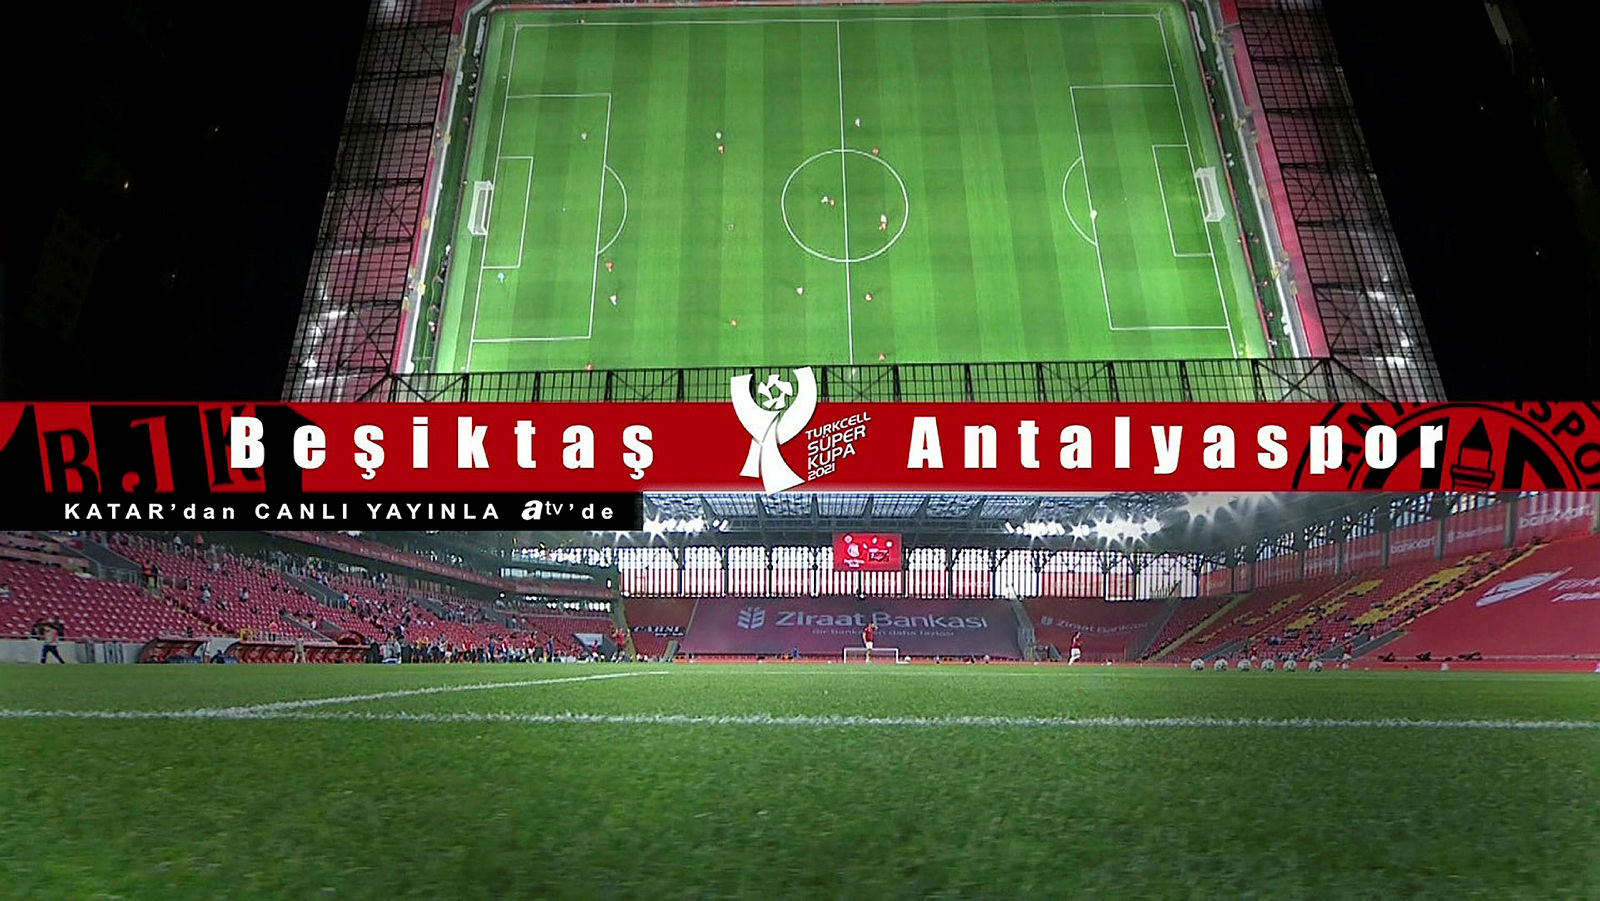 CANLI I Beşiktaş - Antalyaspor ATV canlı yayın izle! Beşiktaş Antalyaspor maçı şifresiz izle! ATV canlı yayını...